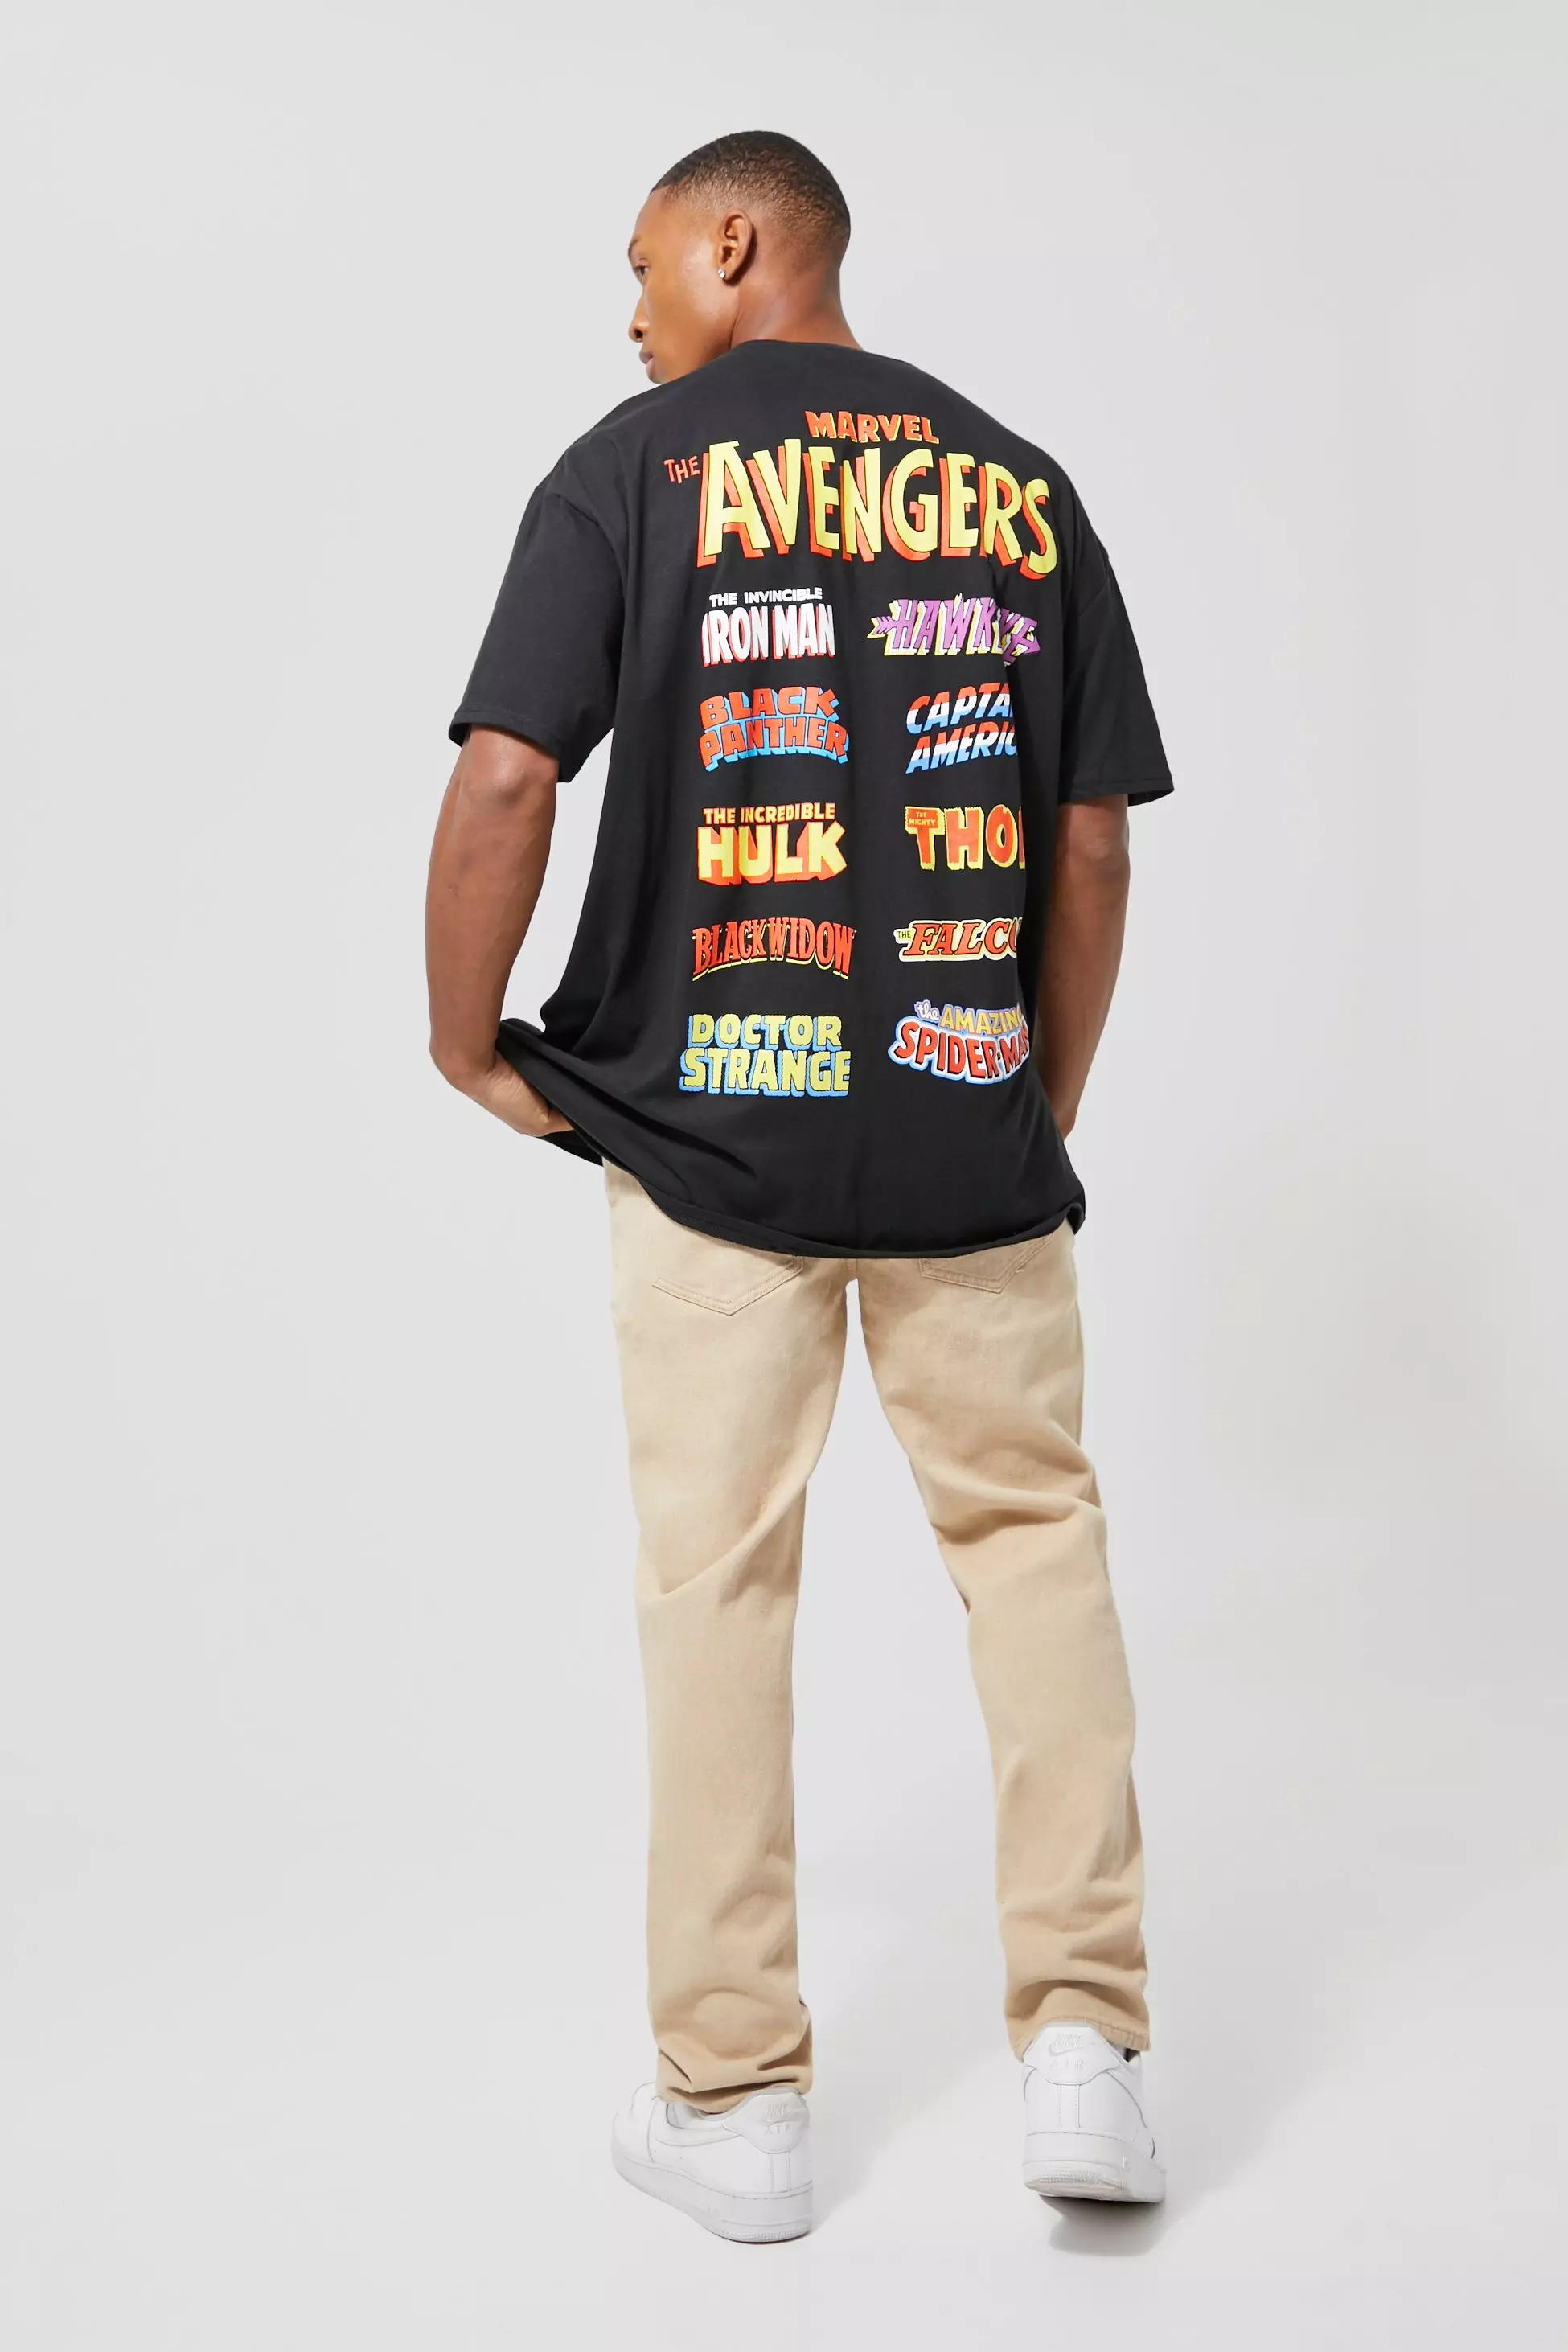 Avengers T-shirt boohooMAN Oversized License Marvel USA |